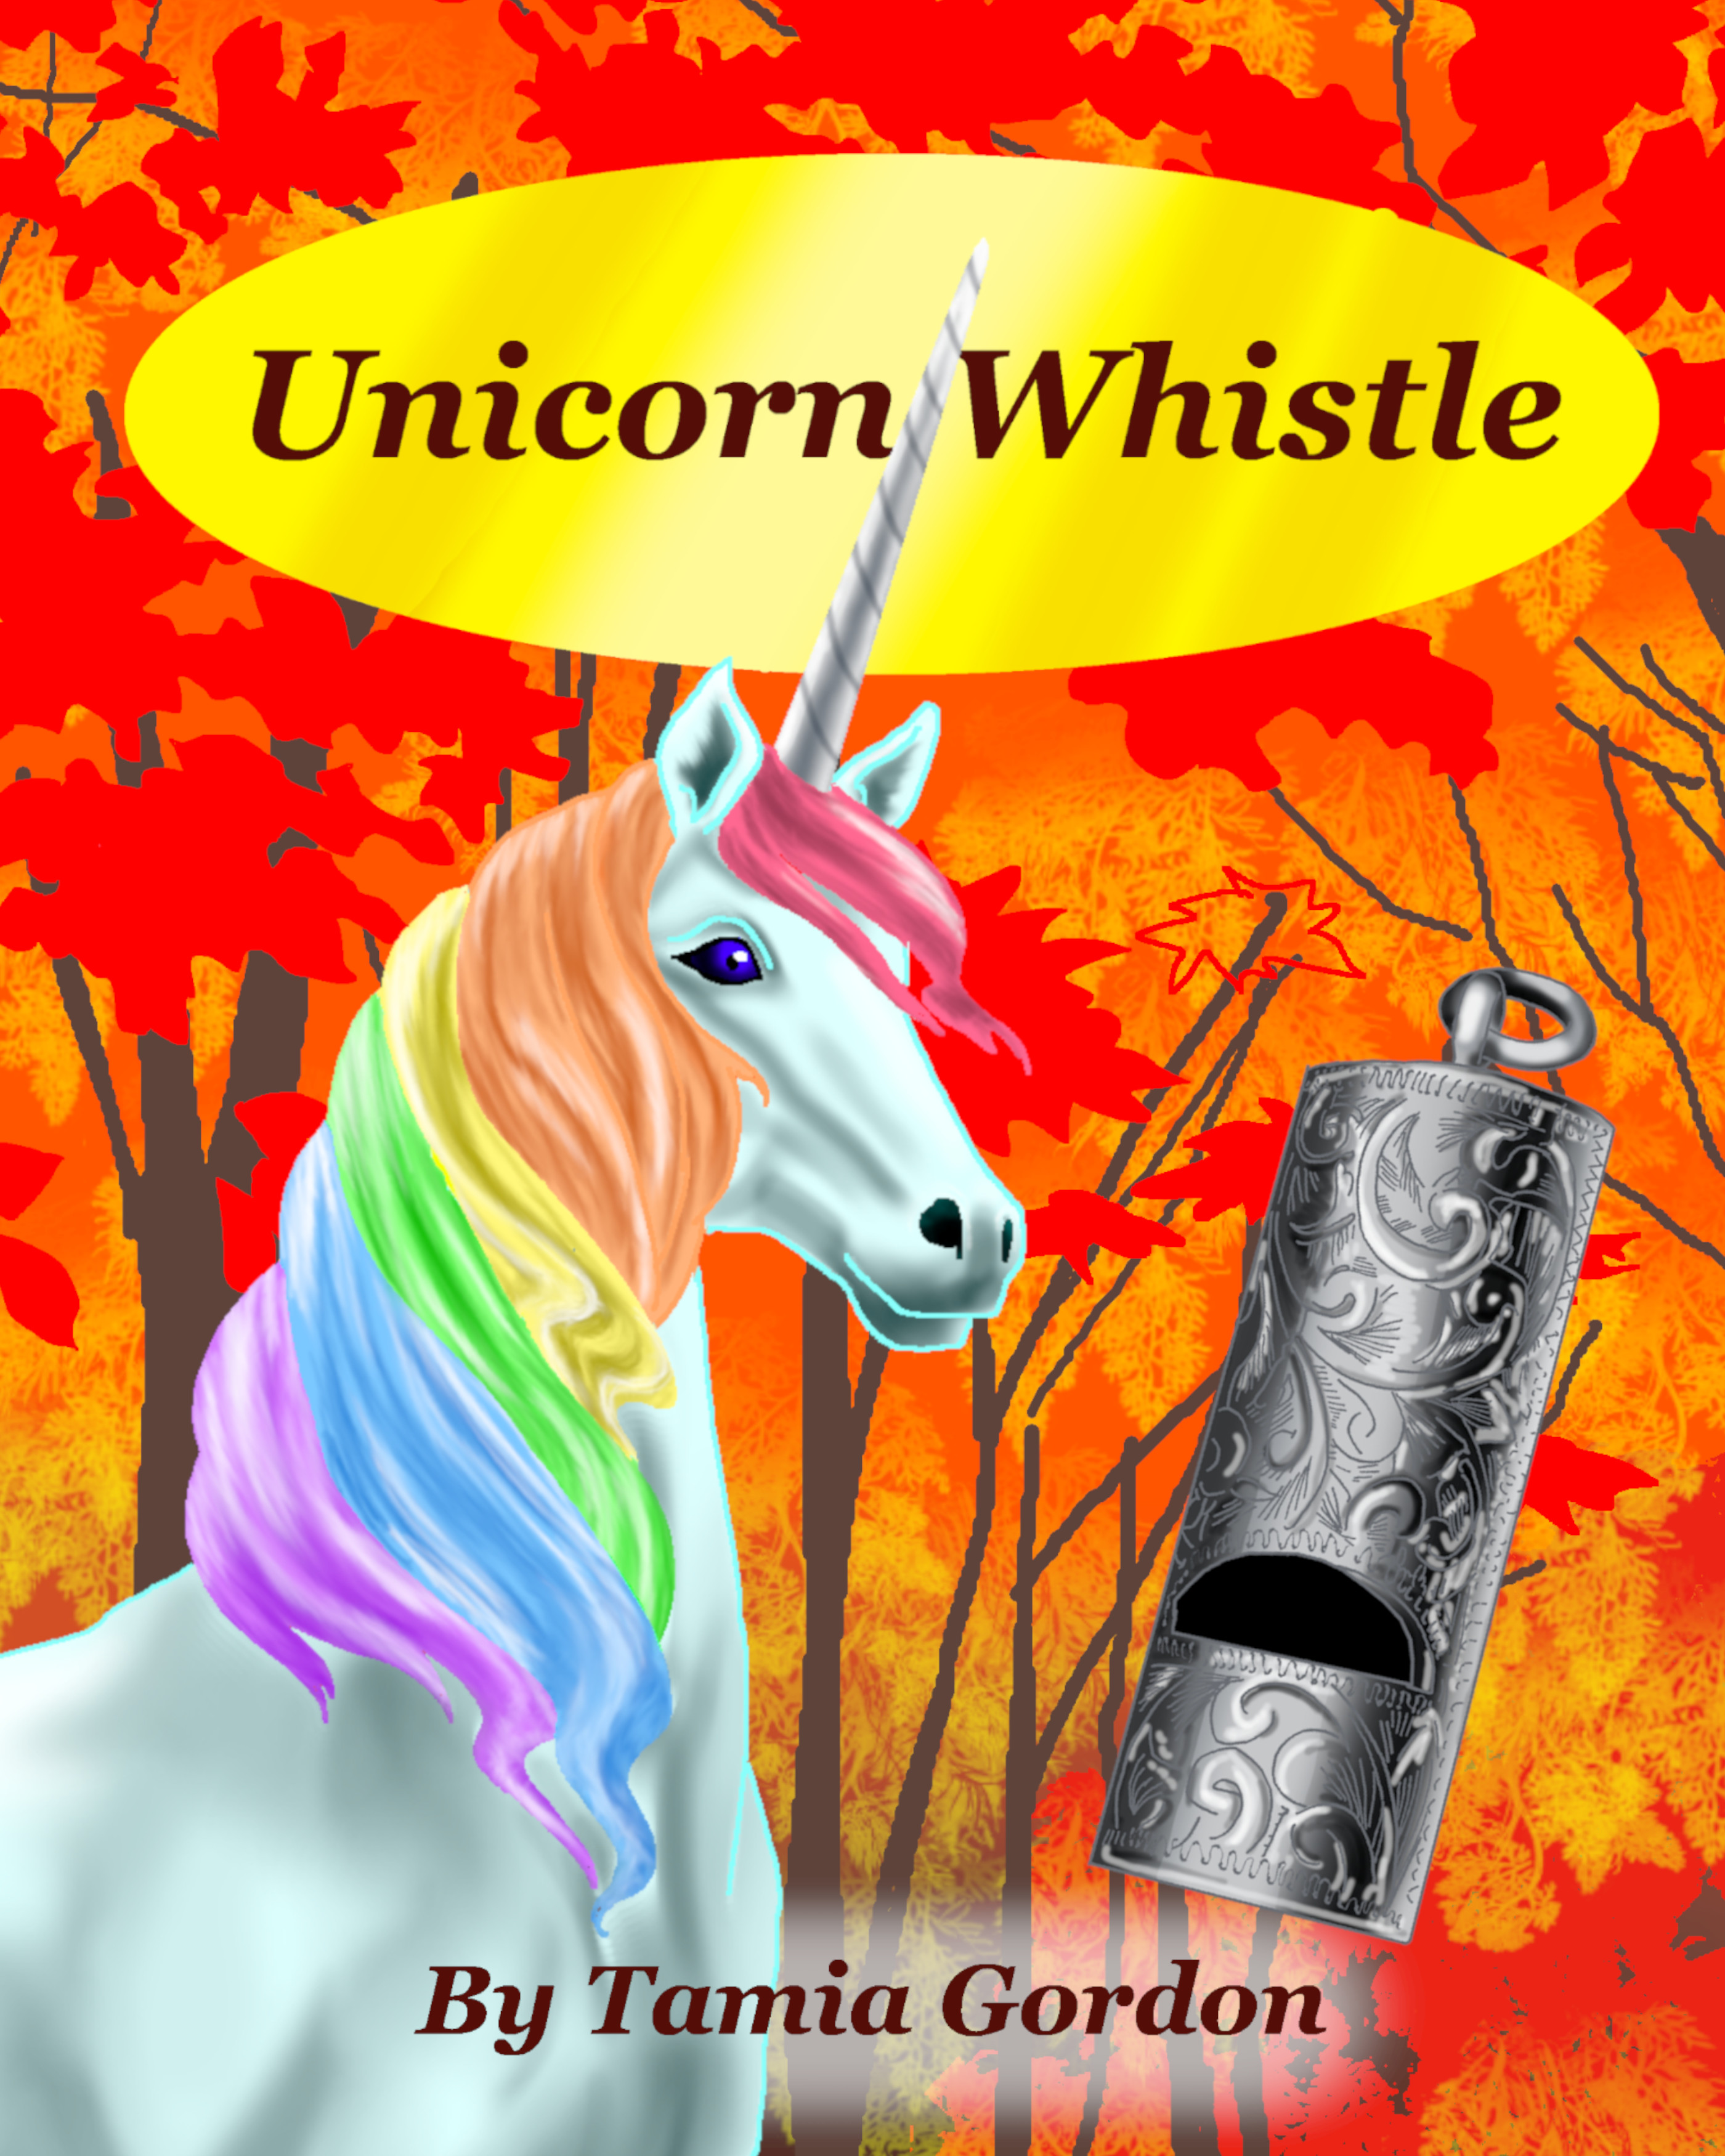 Unicorn Whistle